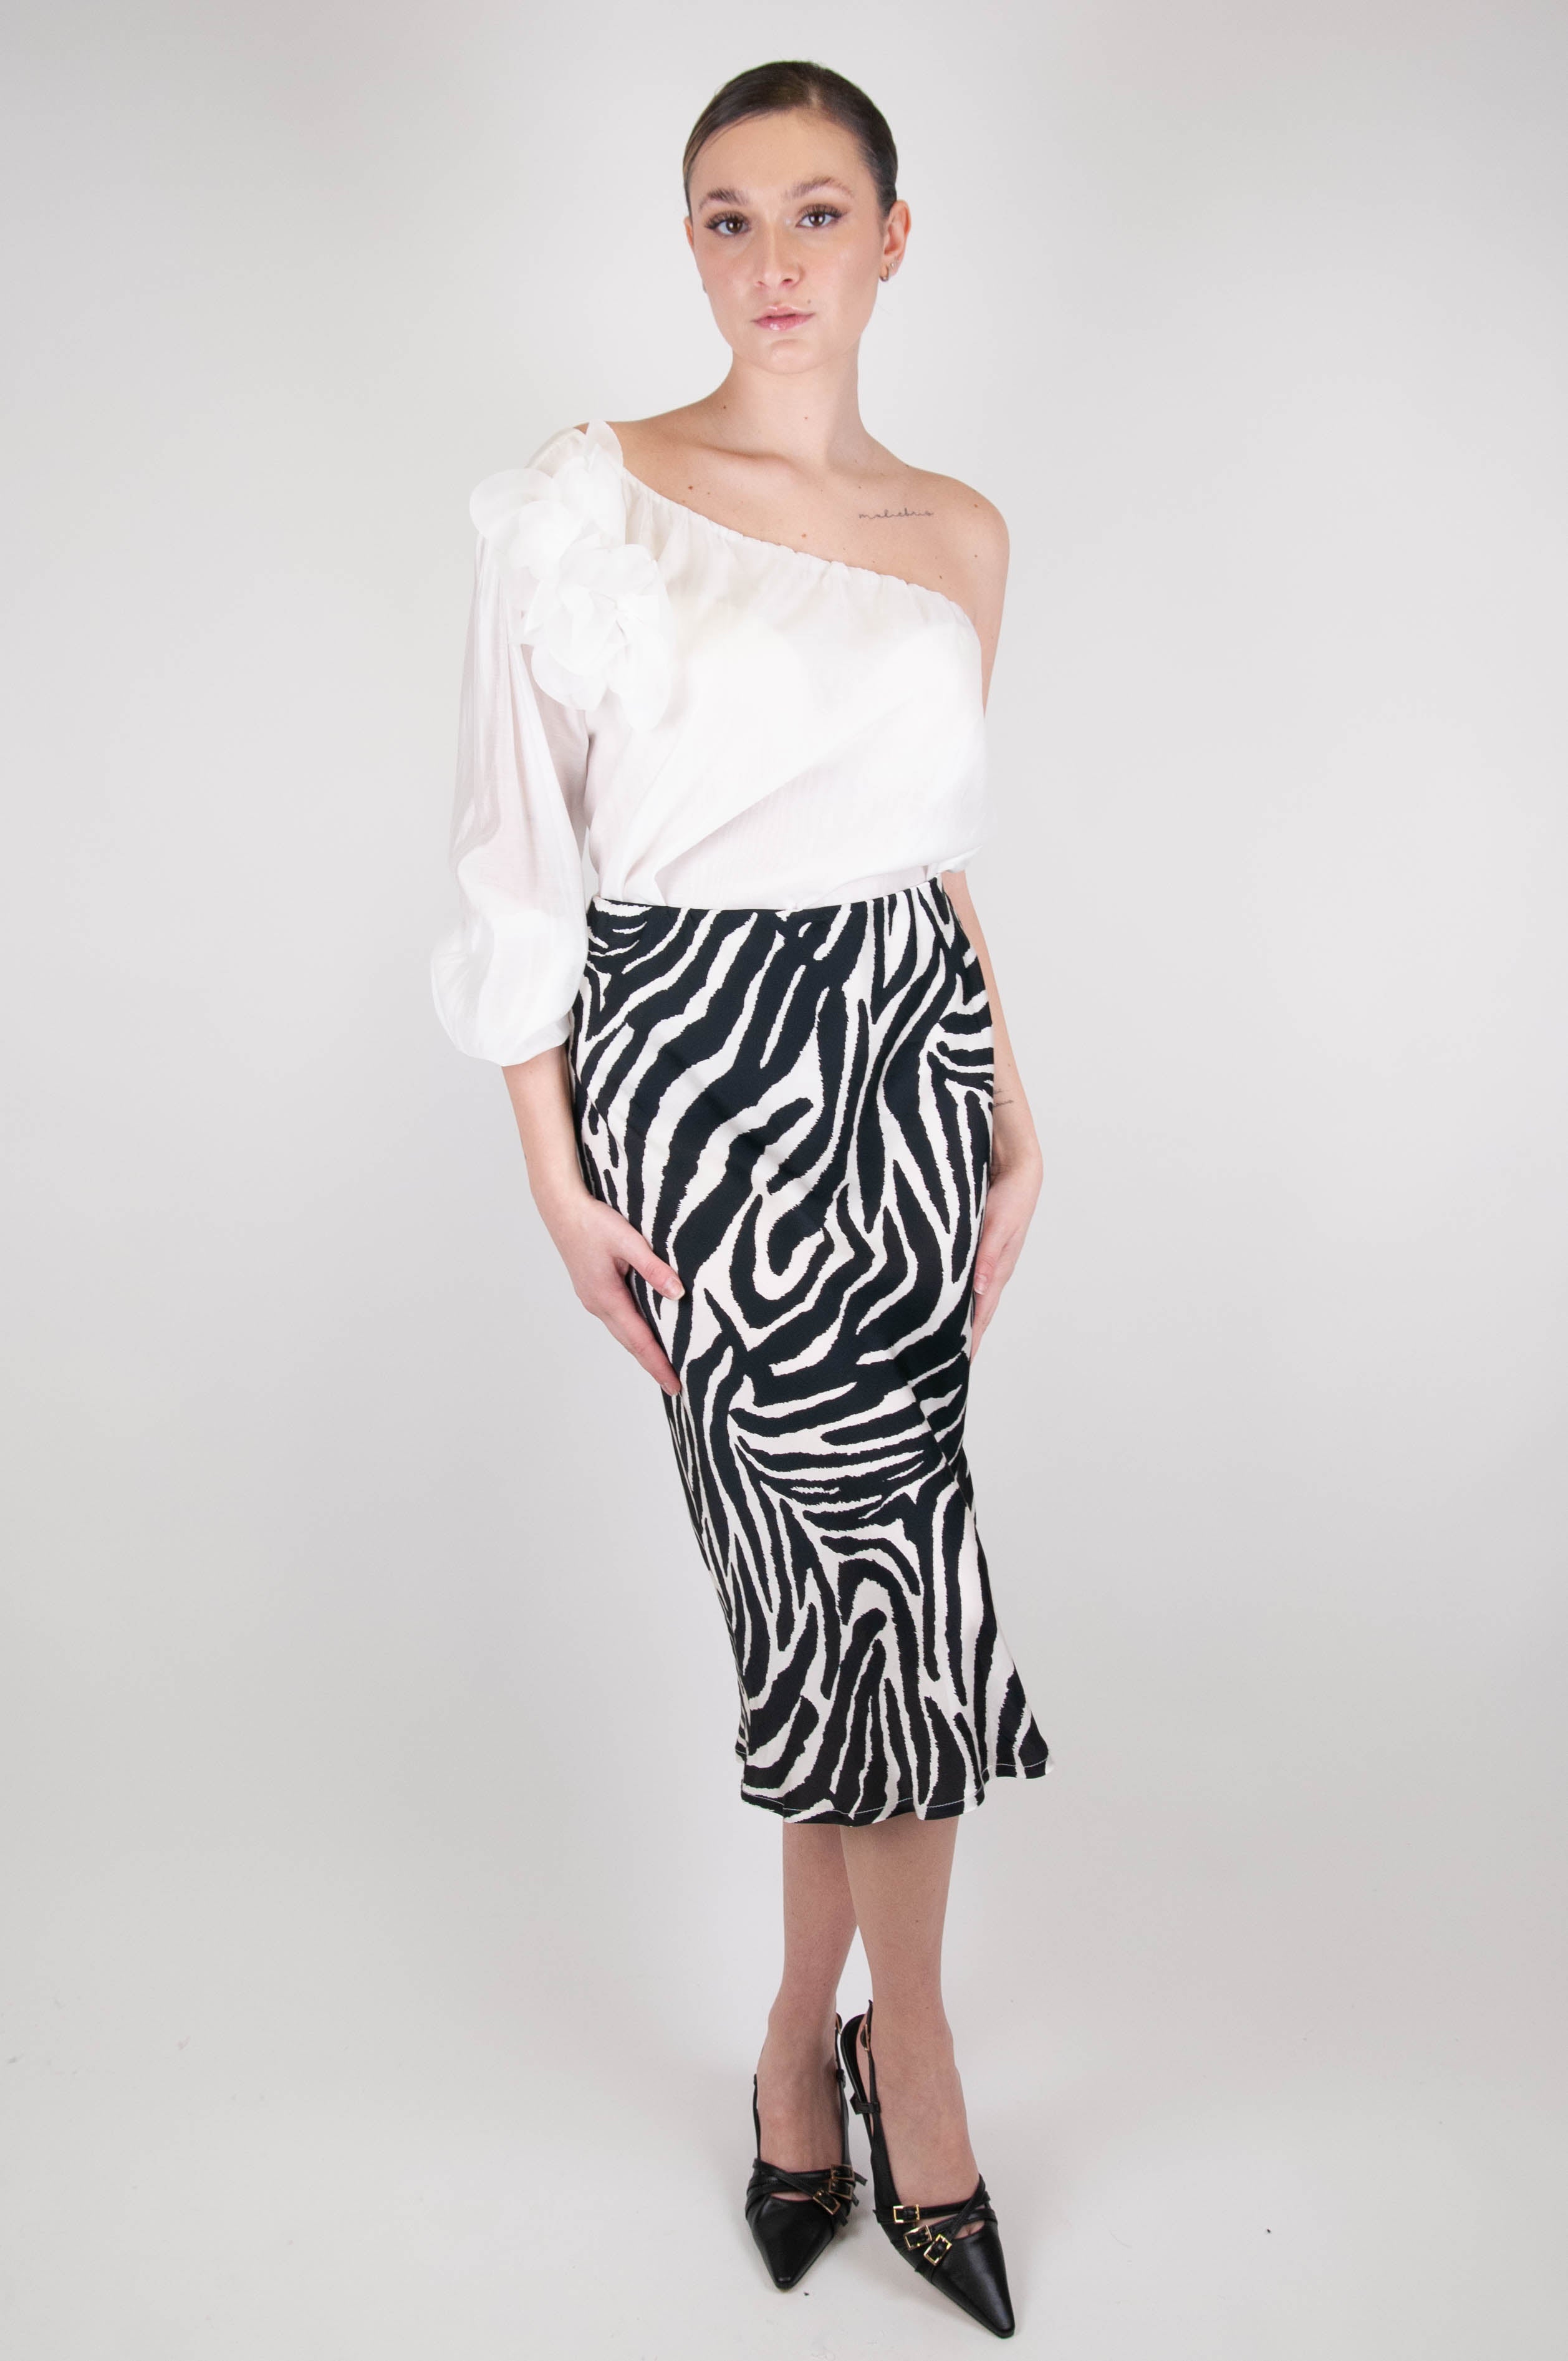 Haveone - Viscose animal print skirt with zebra print